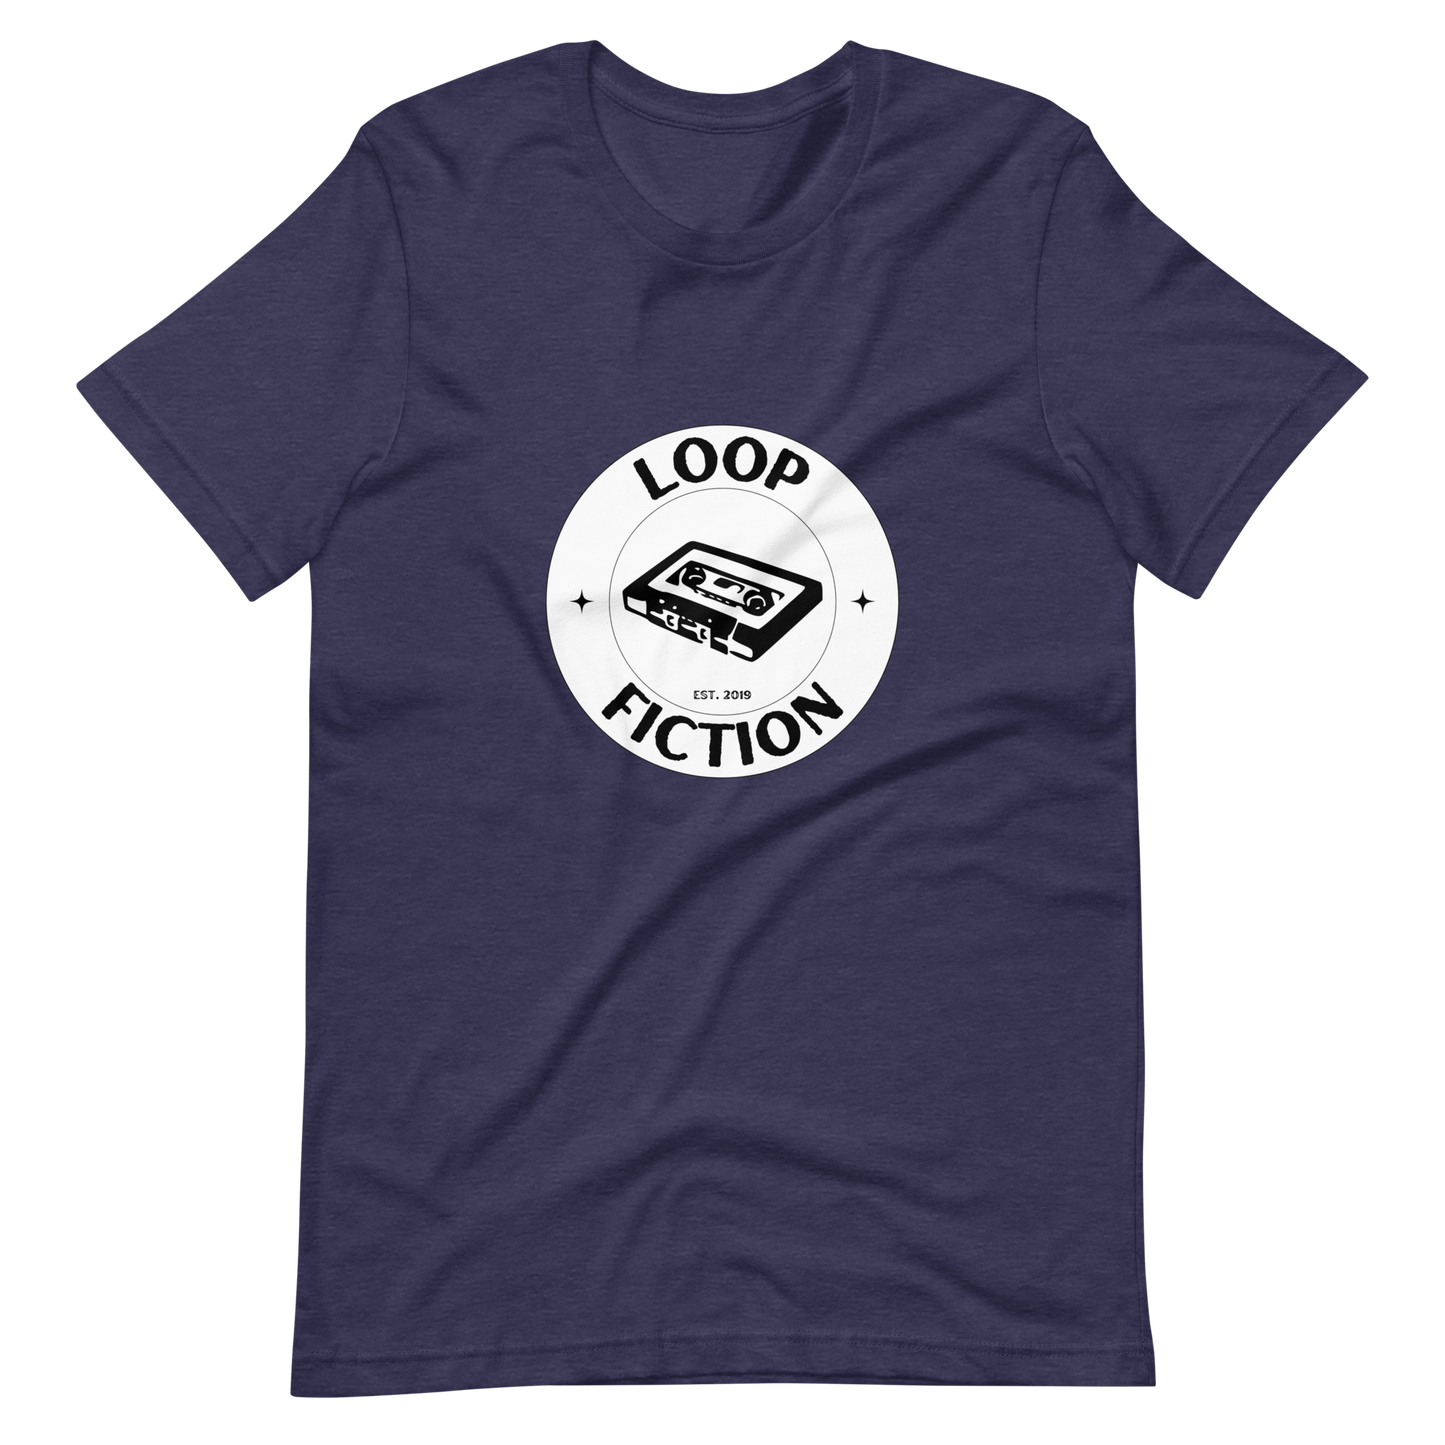 Loop Fiction t-shirt